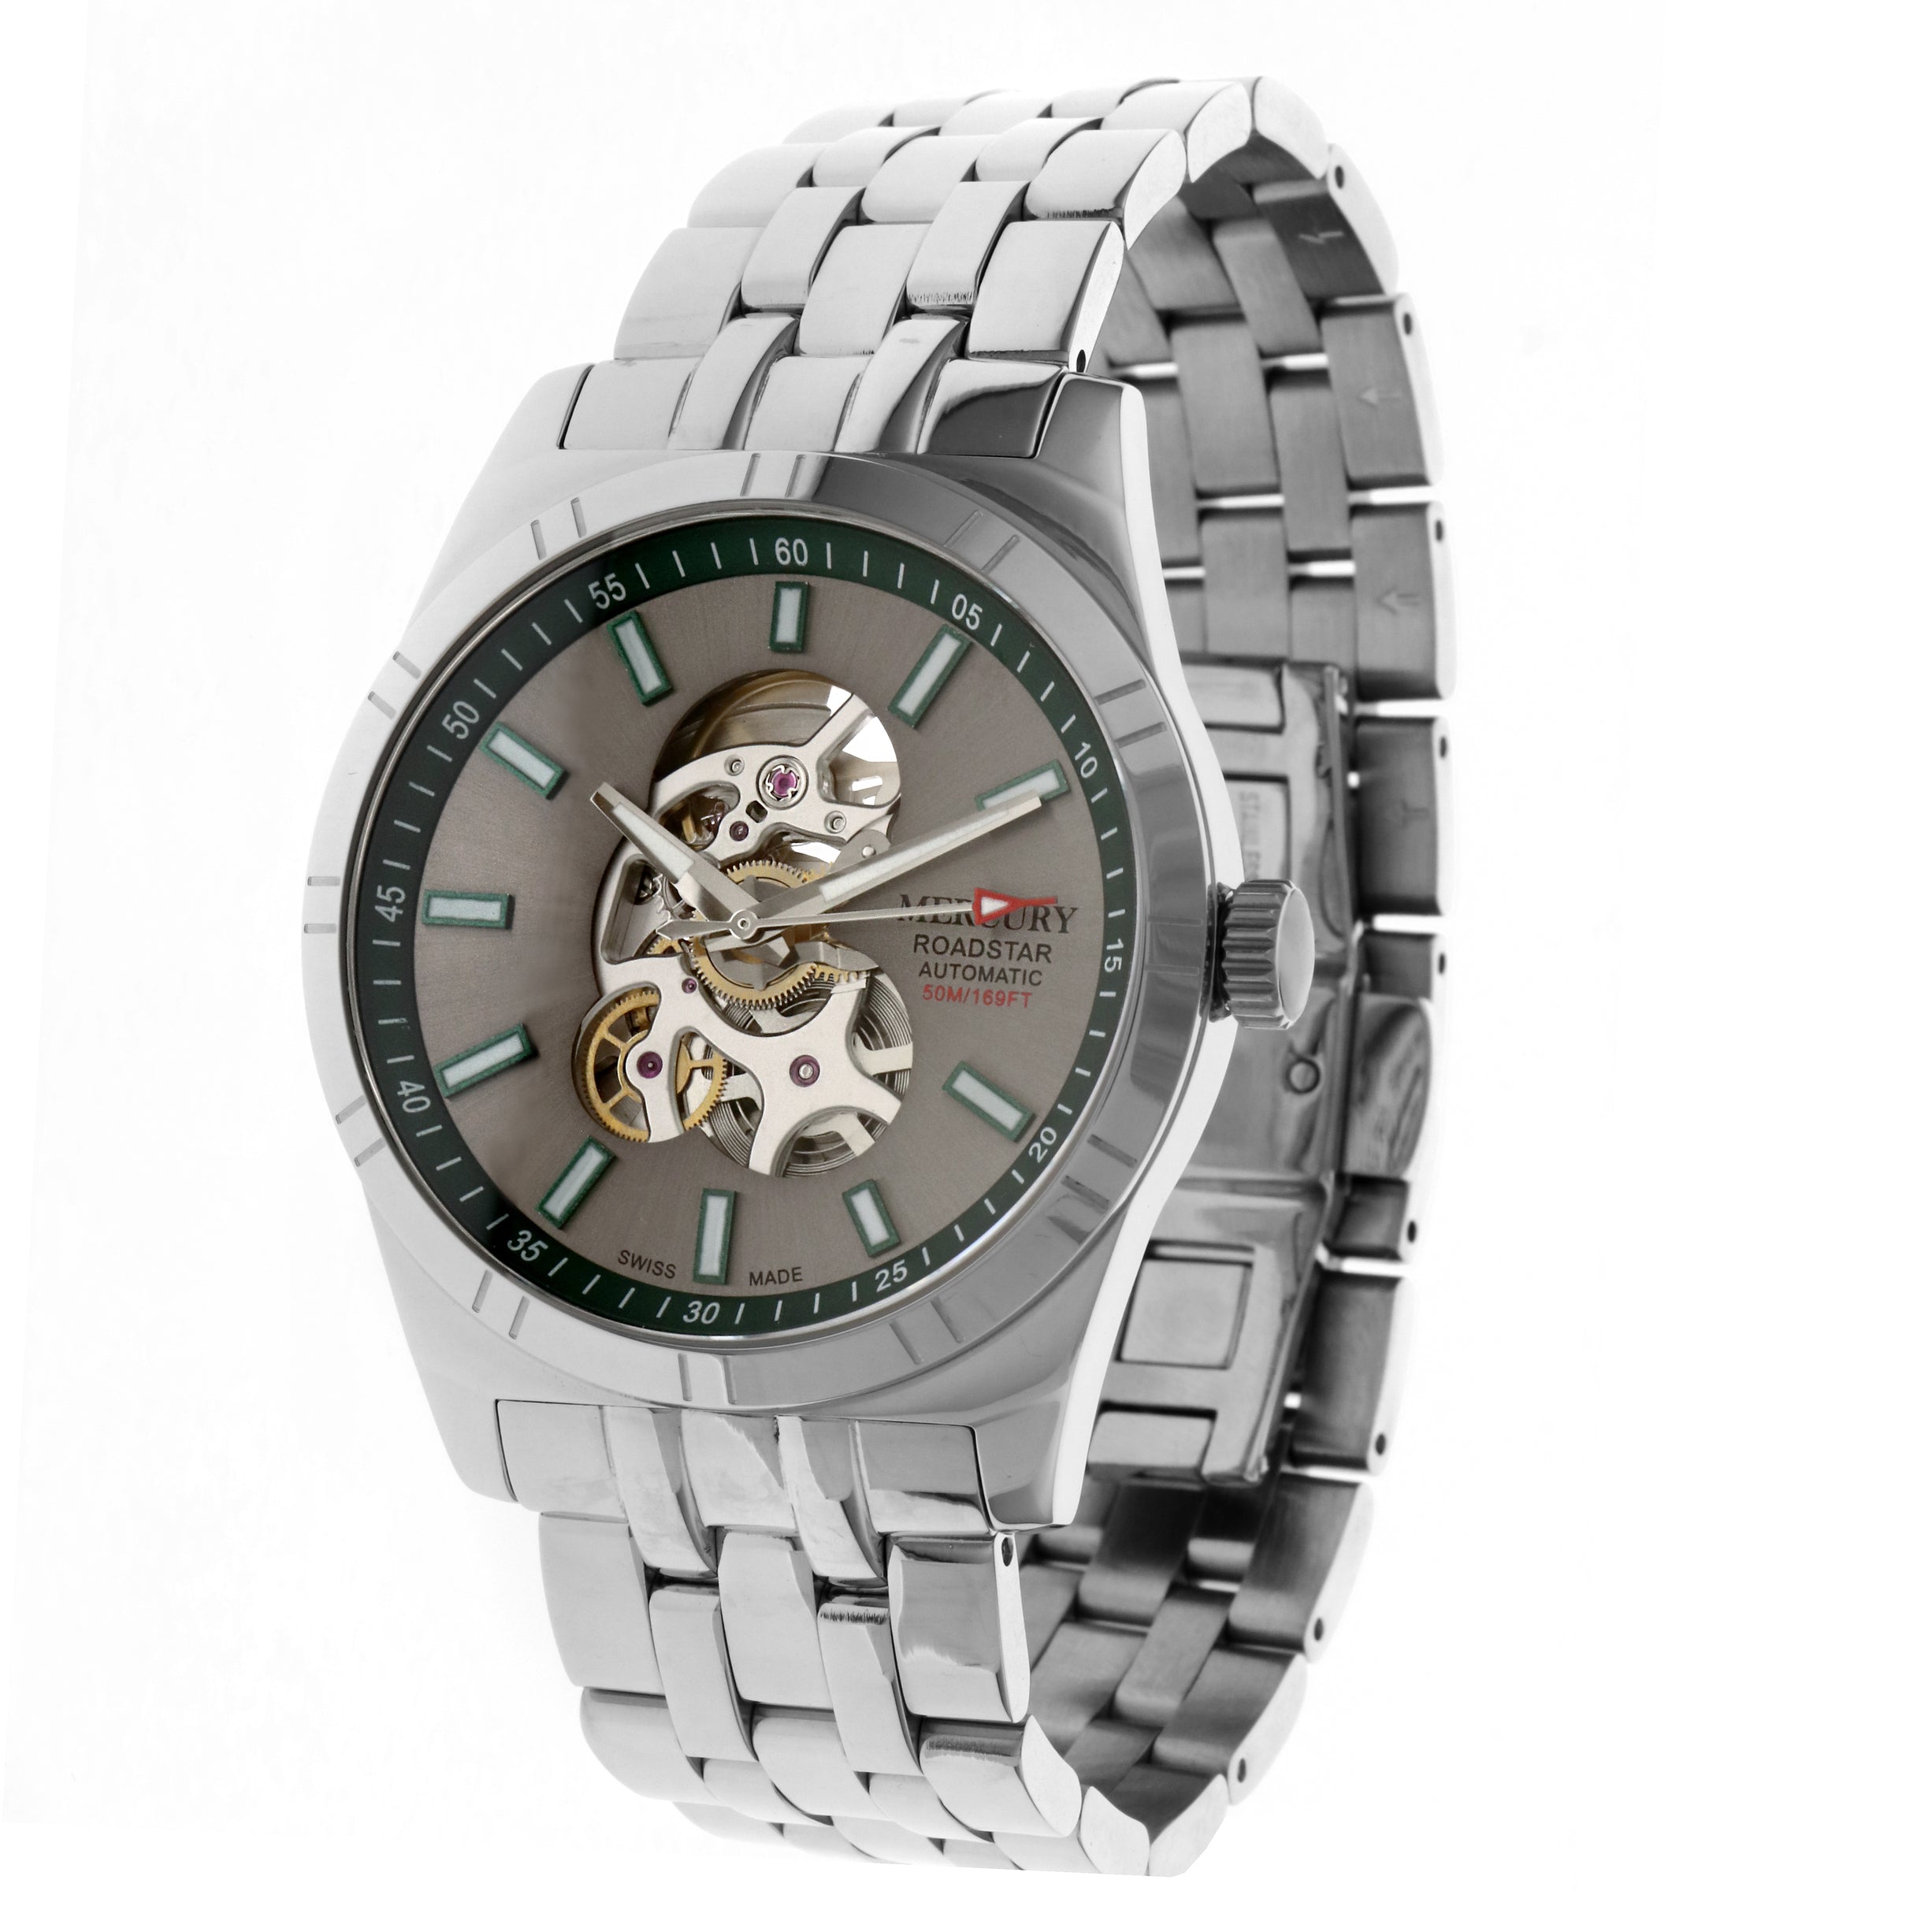 Mercury Swiss Men's Watch, Automatic Movement, Gray Dial - MER-0011